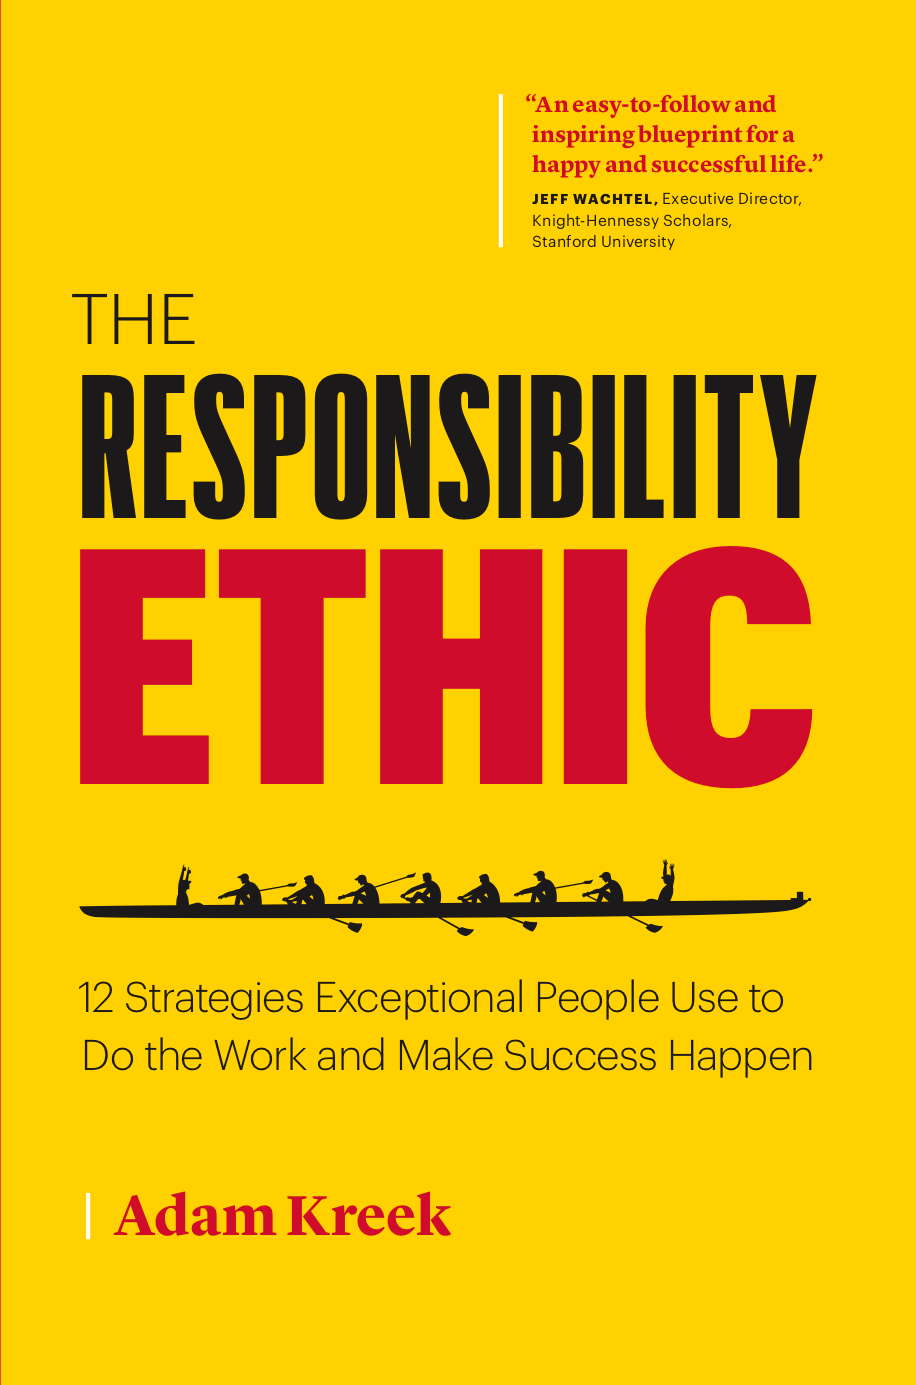 the responsibility ehtic book by adam kreek